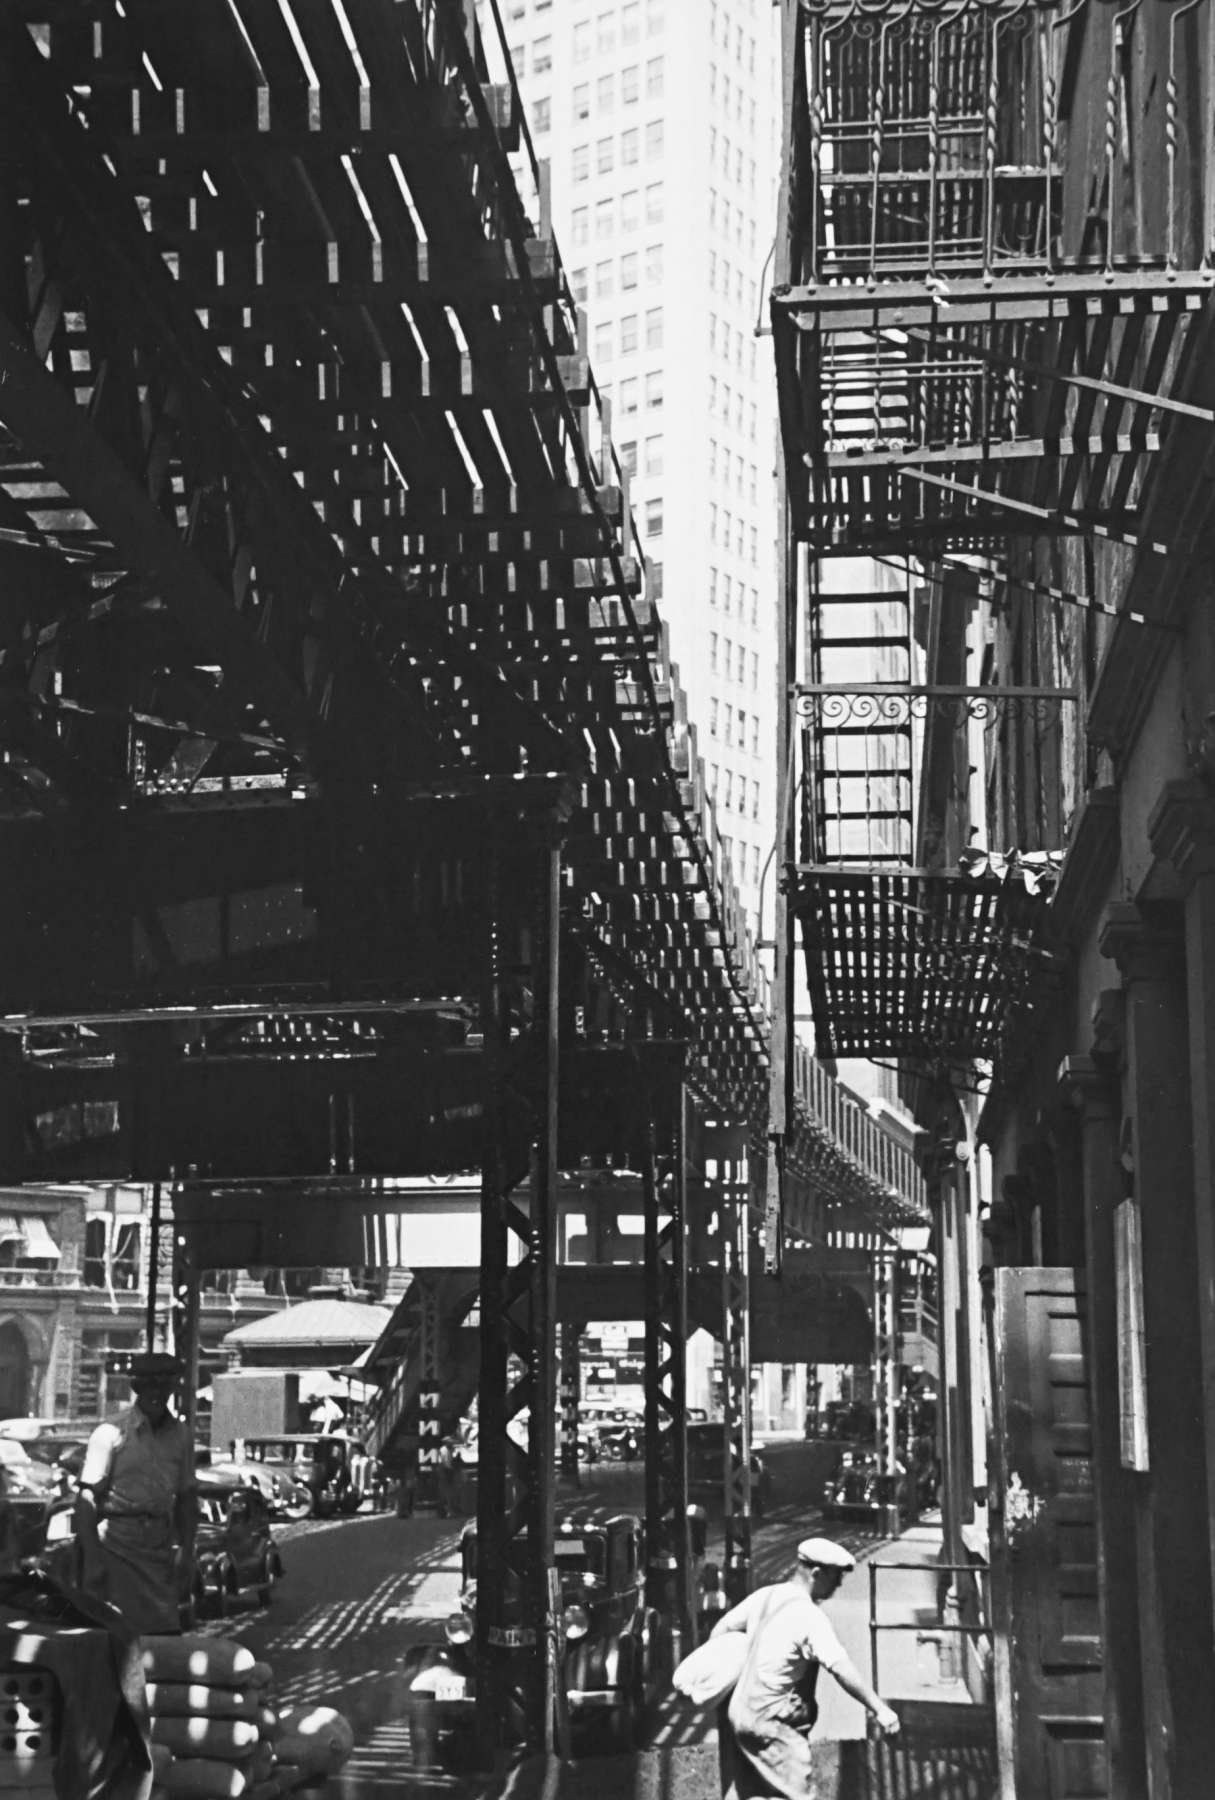 André Kertész, Third Avenue El, New York, 1937 - Artwork 42601 